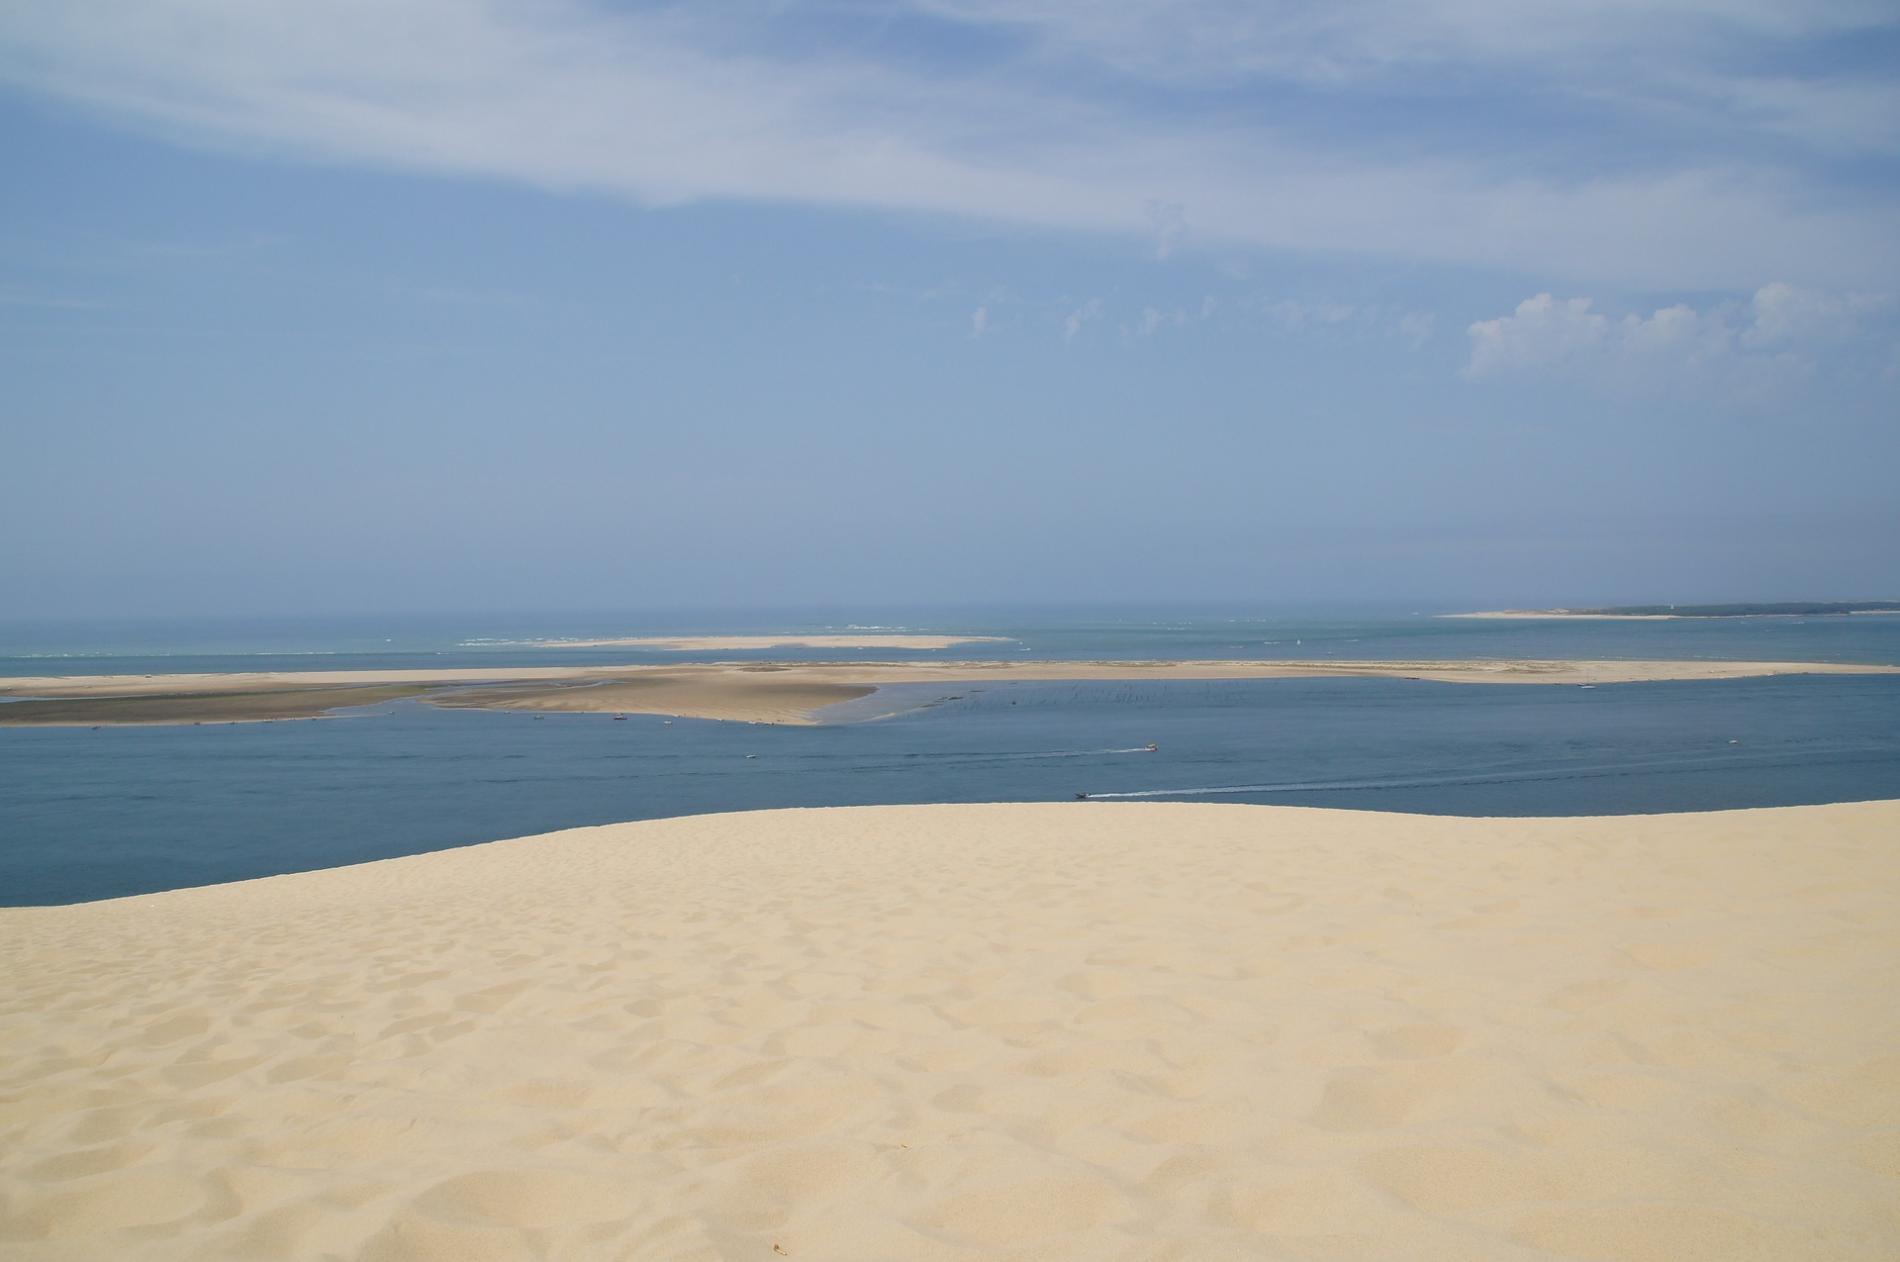 The dune of Pyla